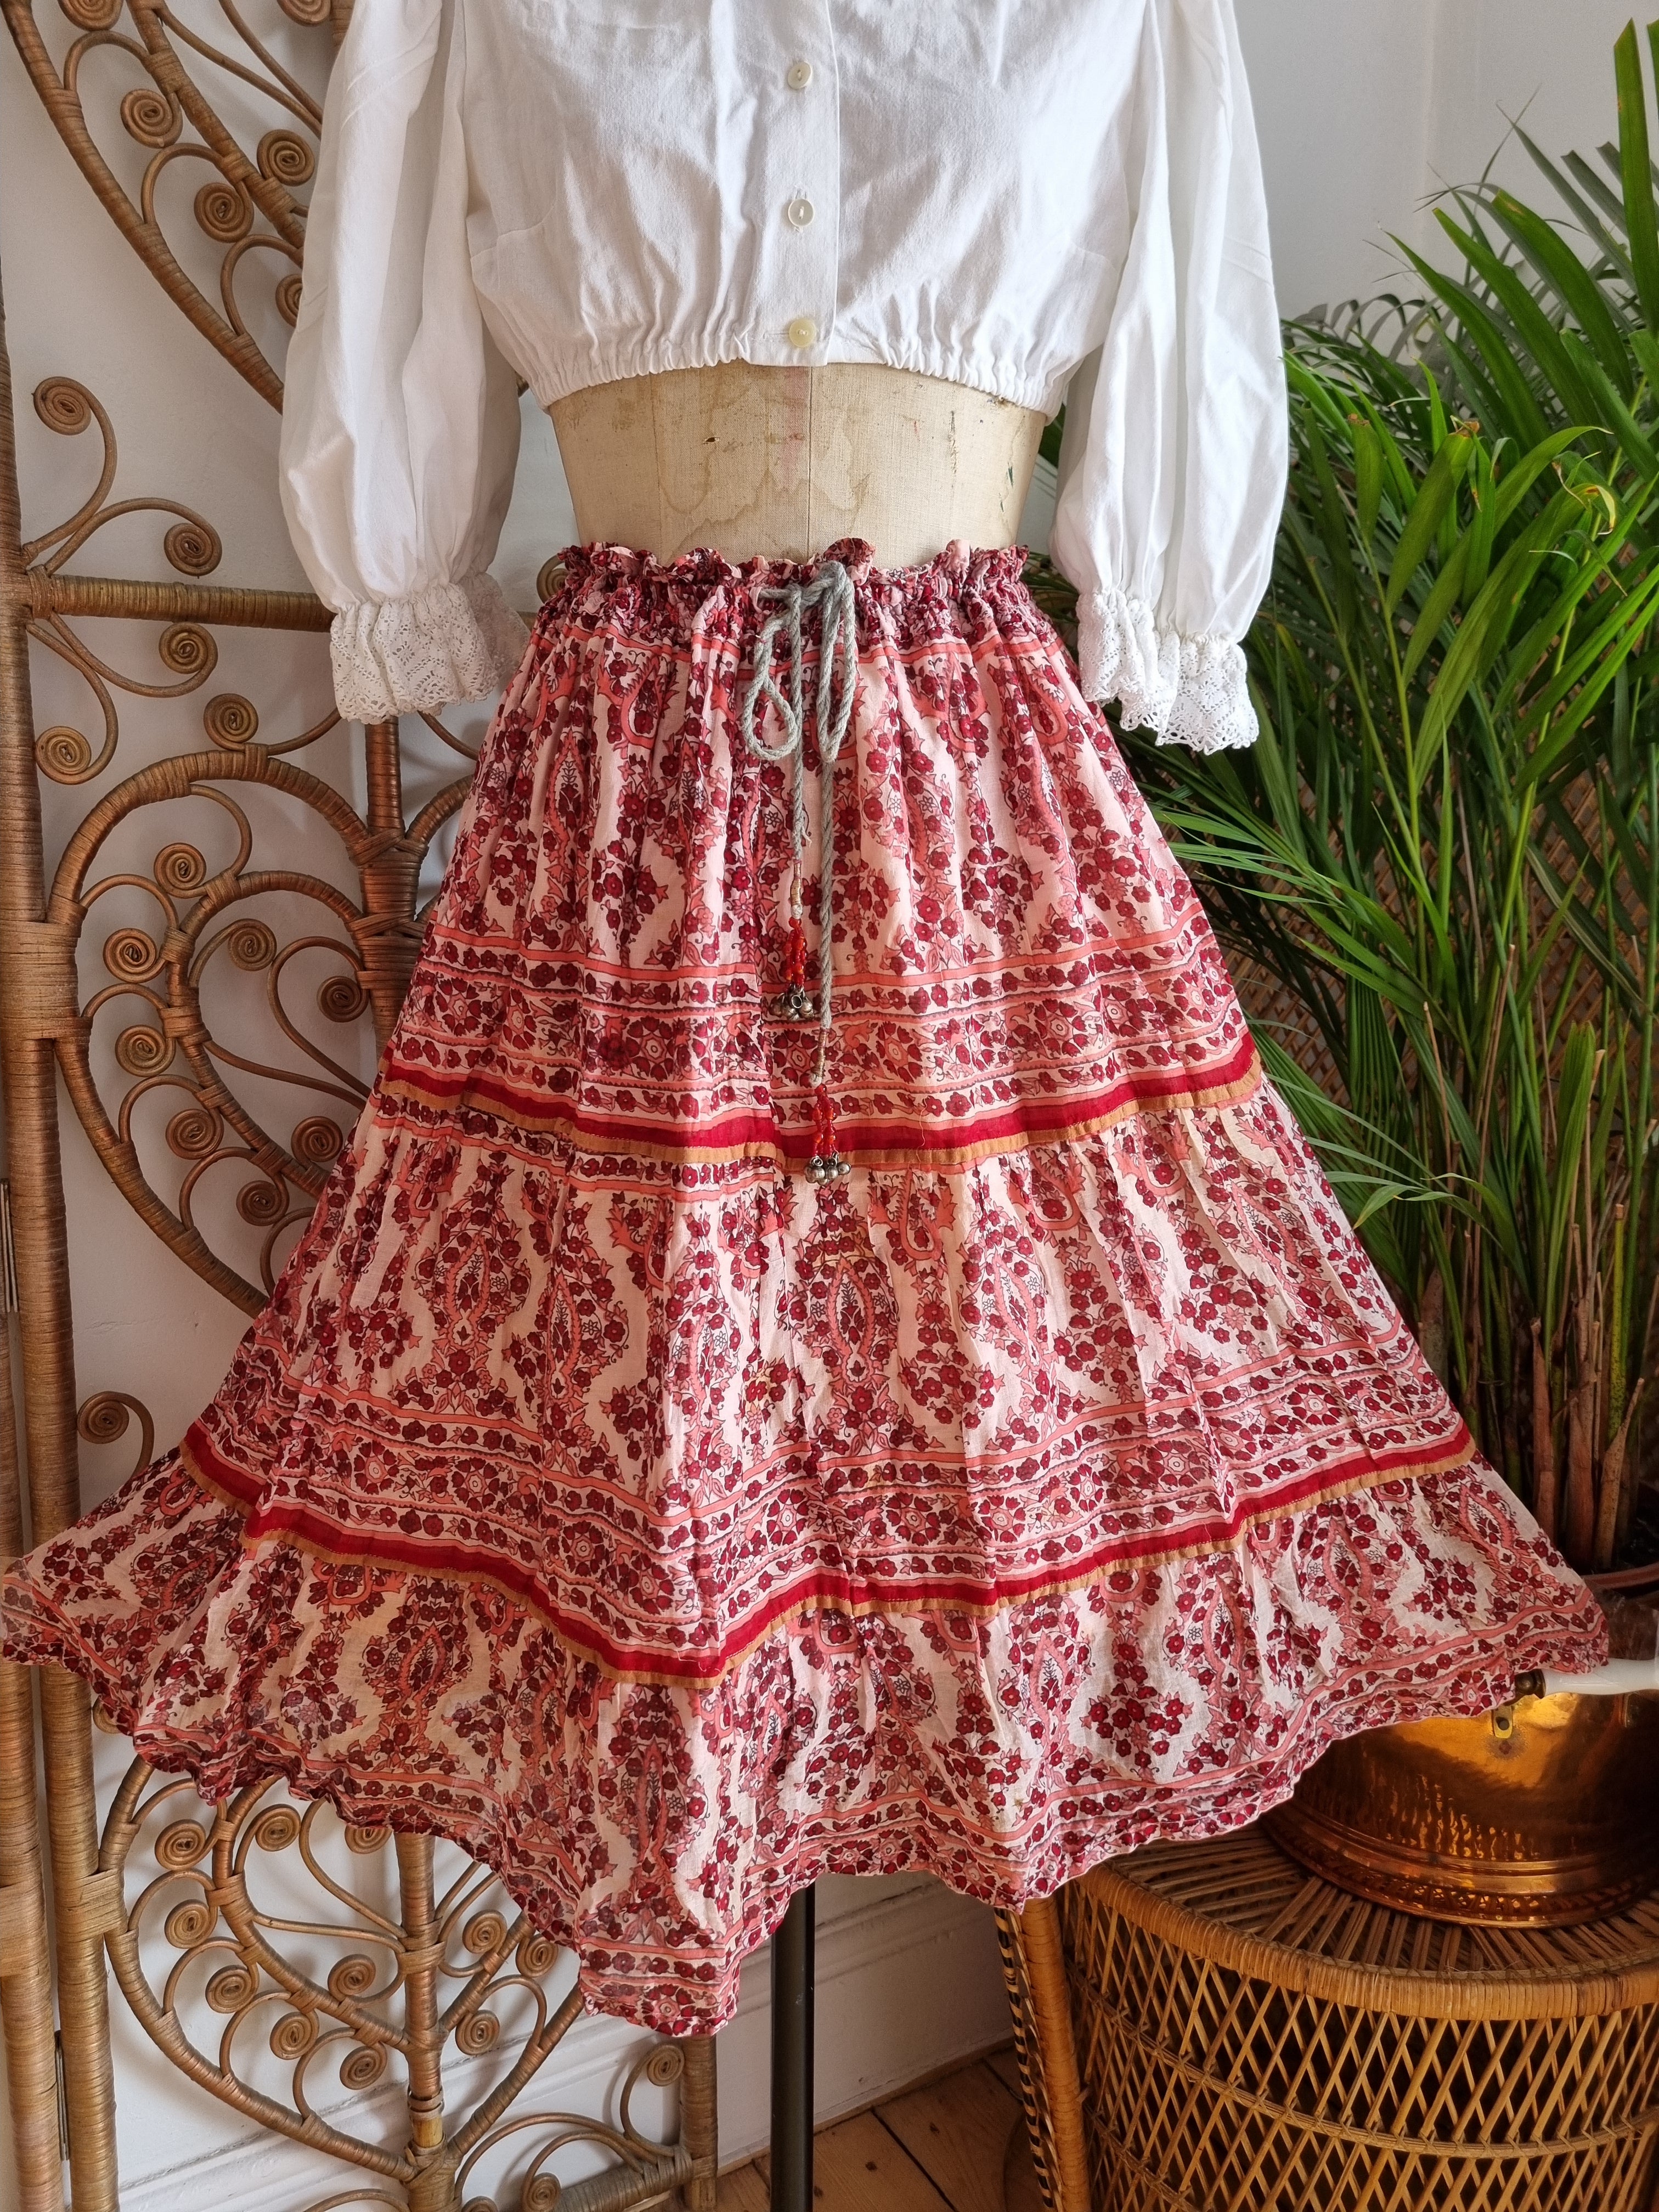 Ethnic Long Skirts - Buy Ethnic Long Skirts Online | Myntra